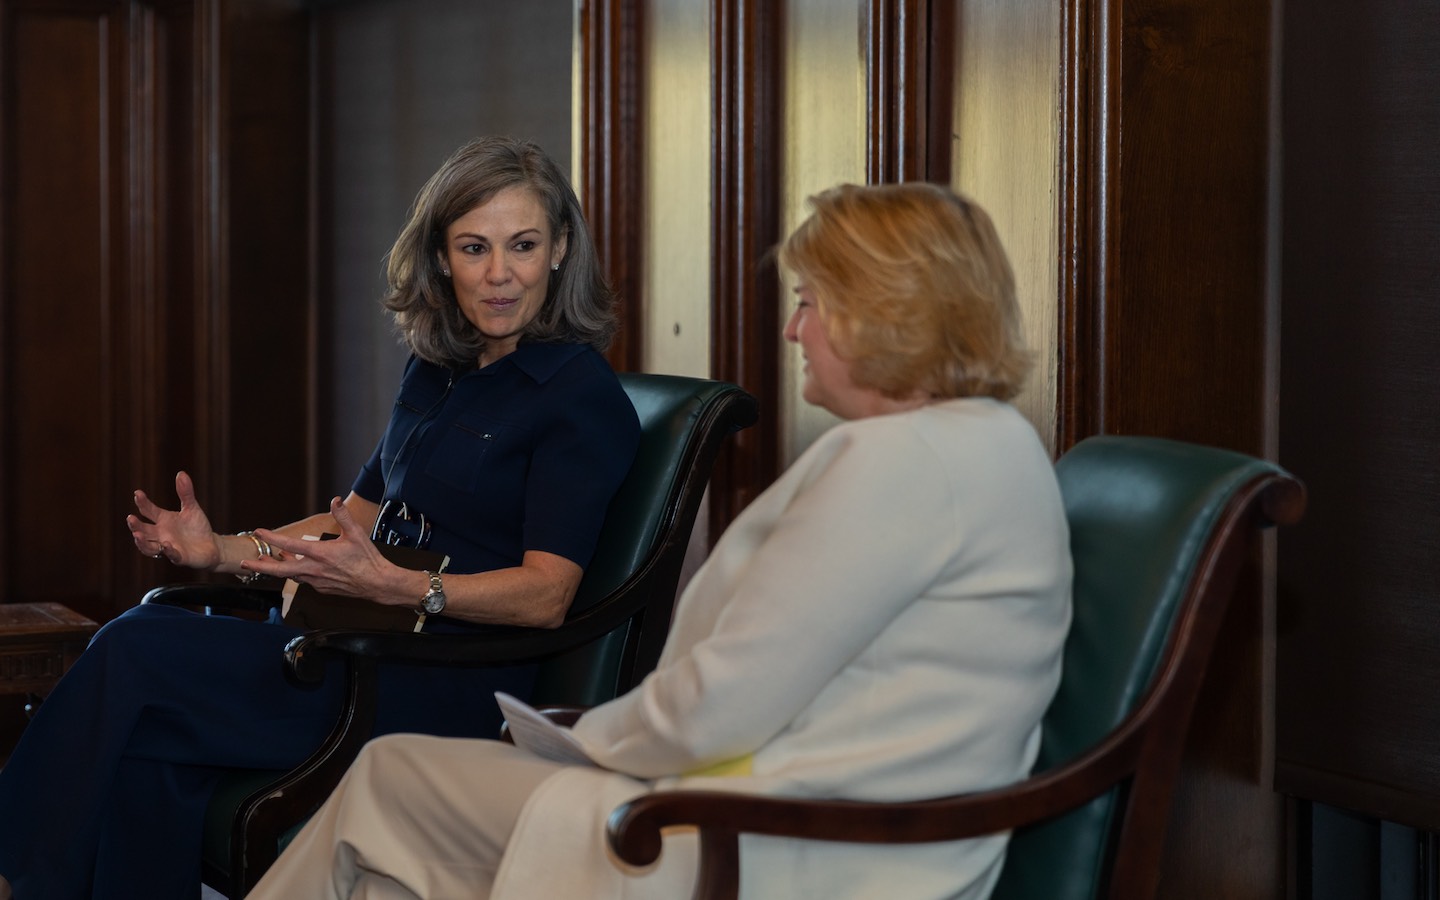 Mary Dillon and Melissa Bean talk at the Women's Leadership Council